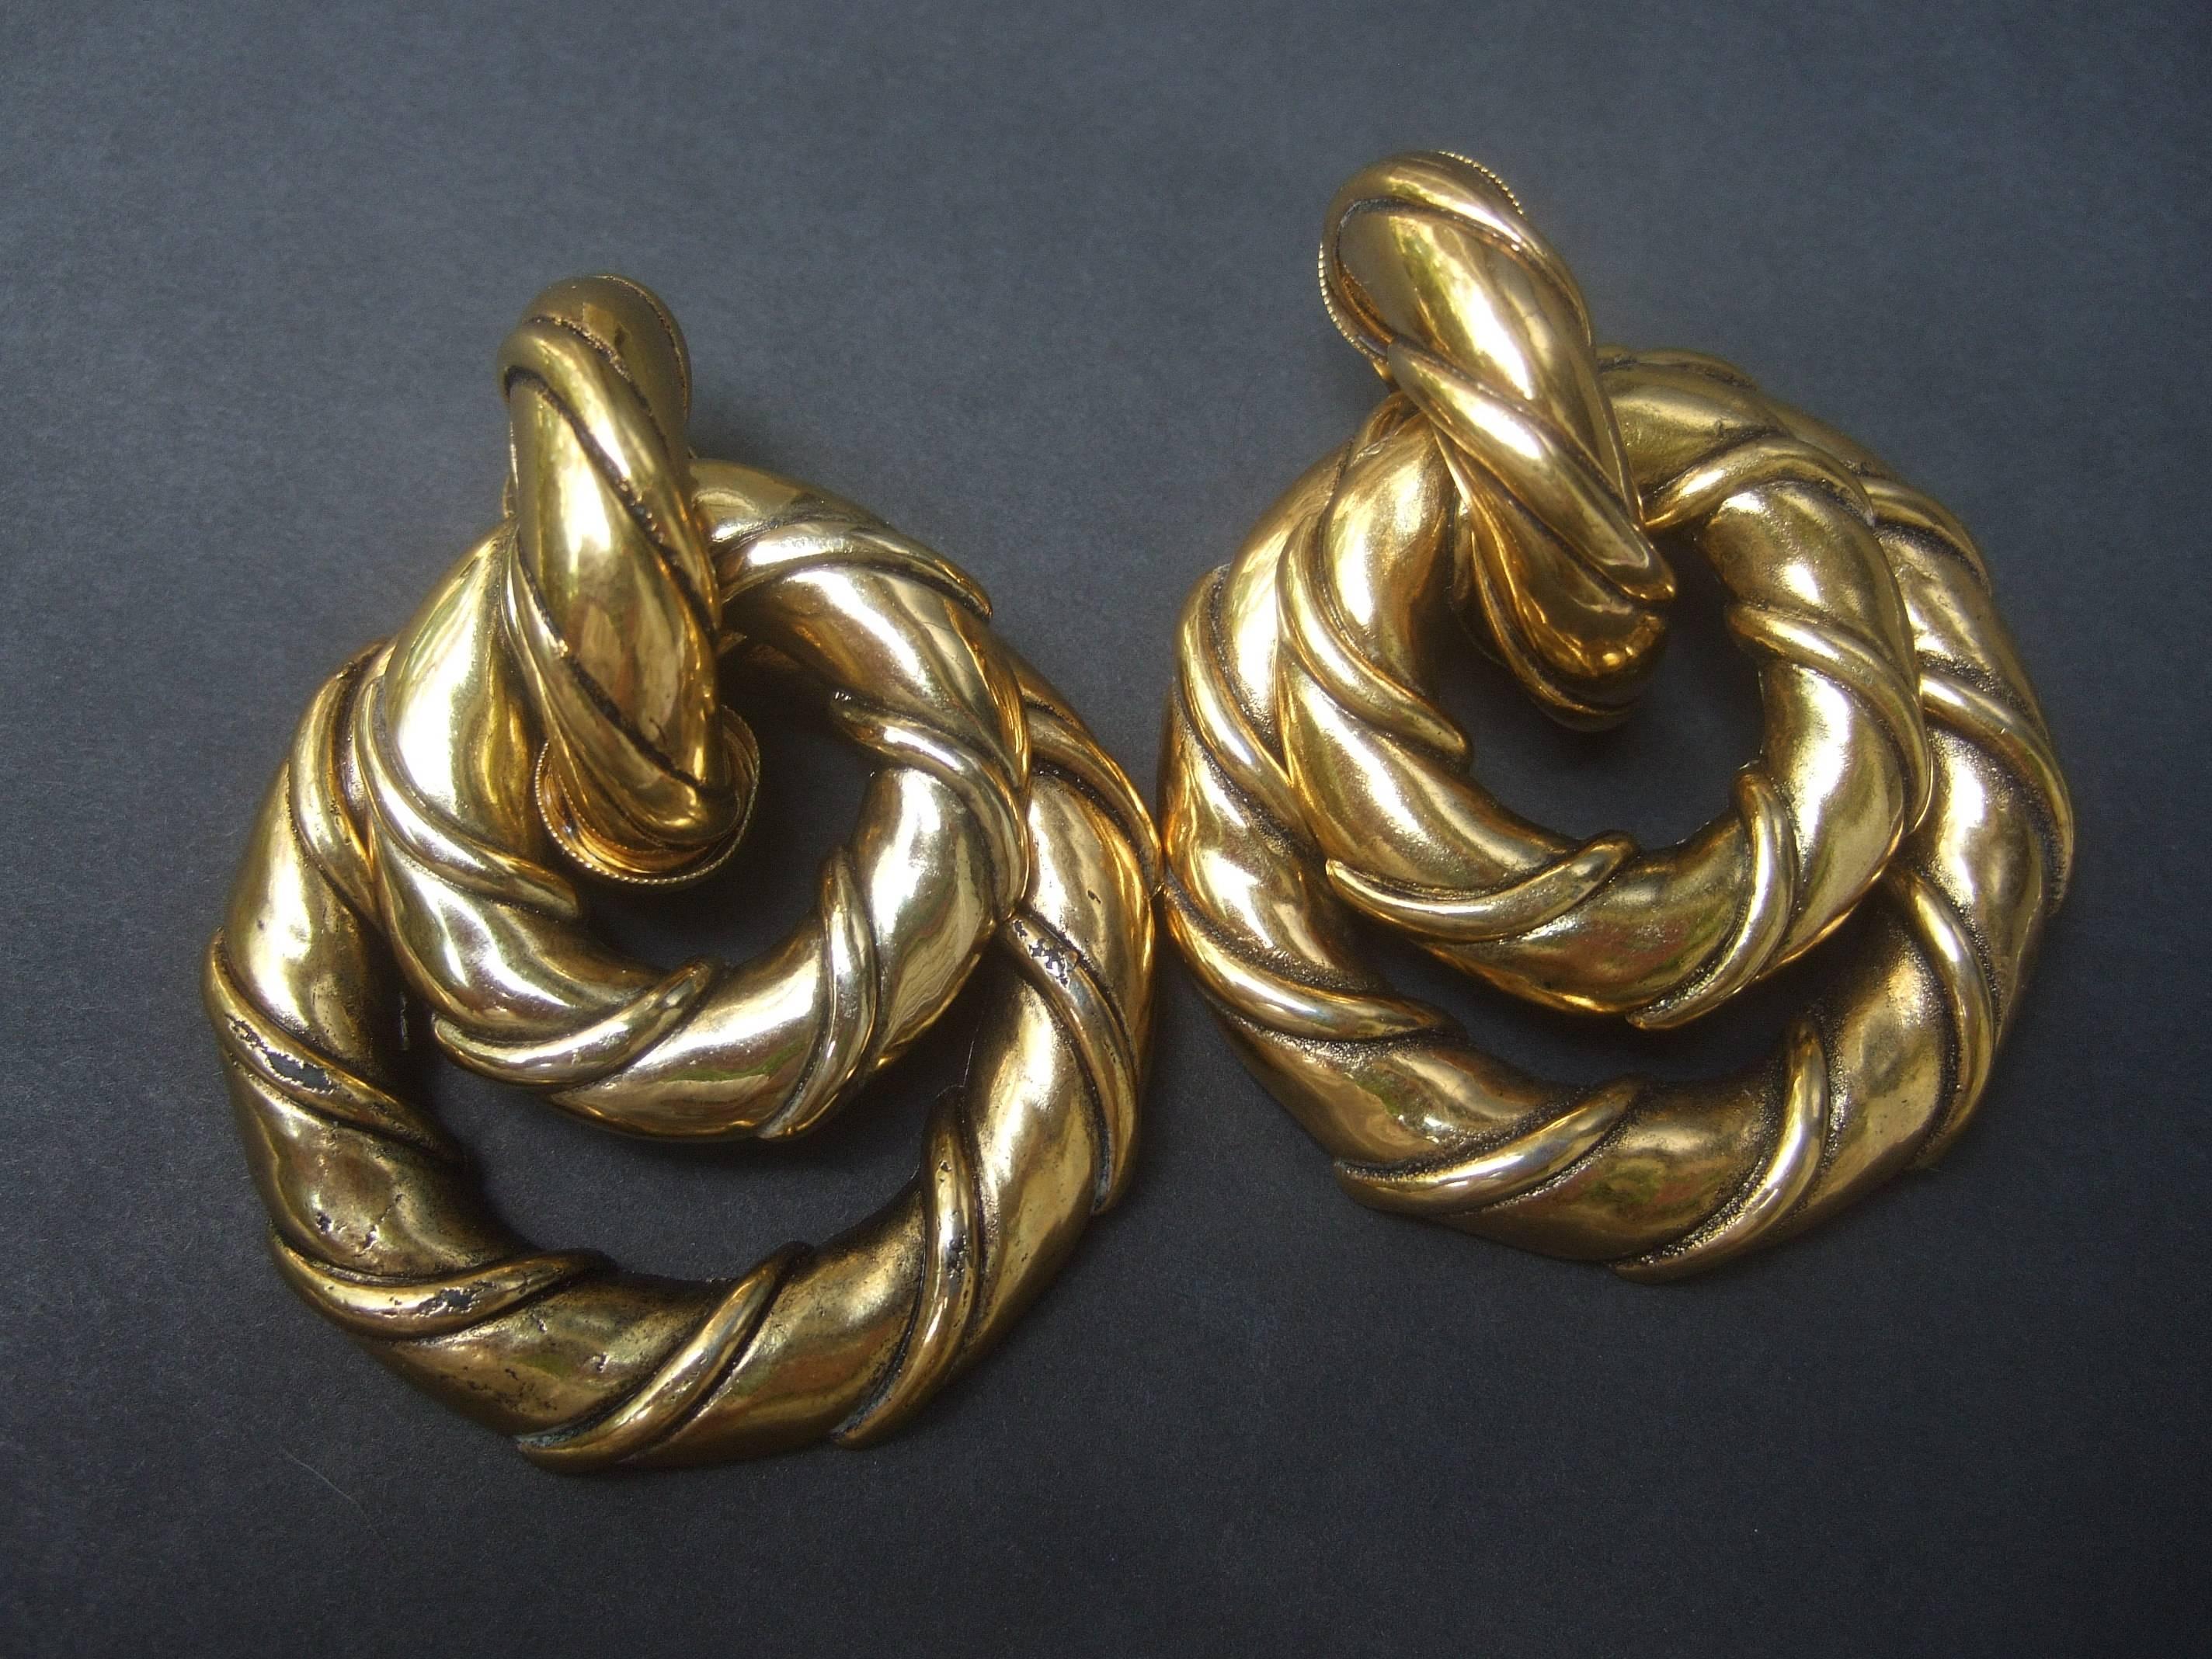  Gilt Metal Interchangeable Hoop Earrings by Une Ligne Paris  For Sale 2